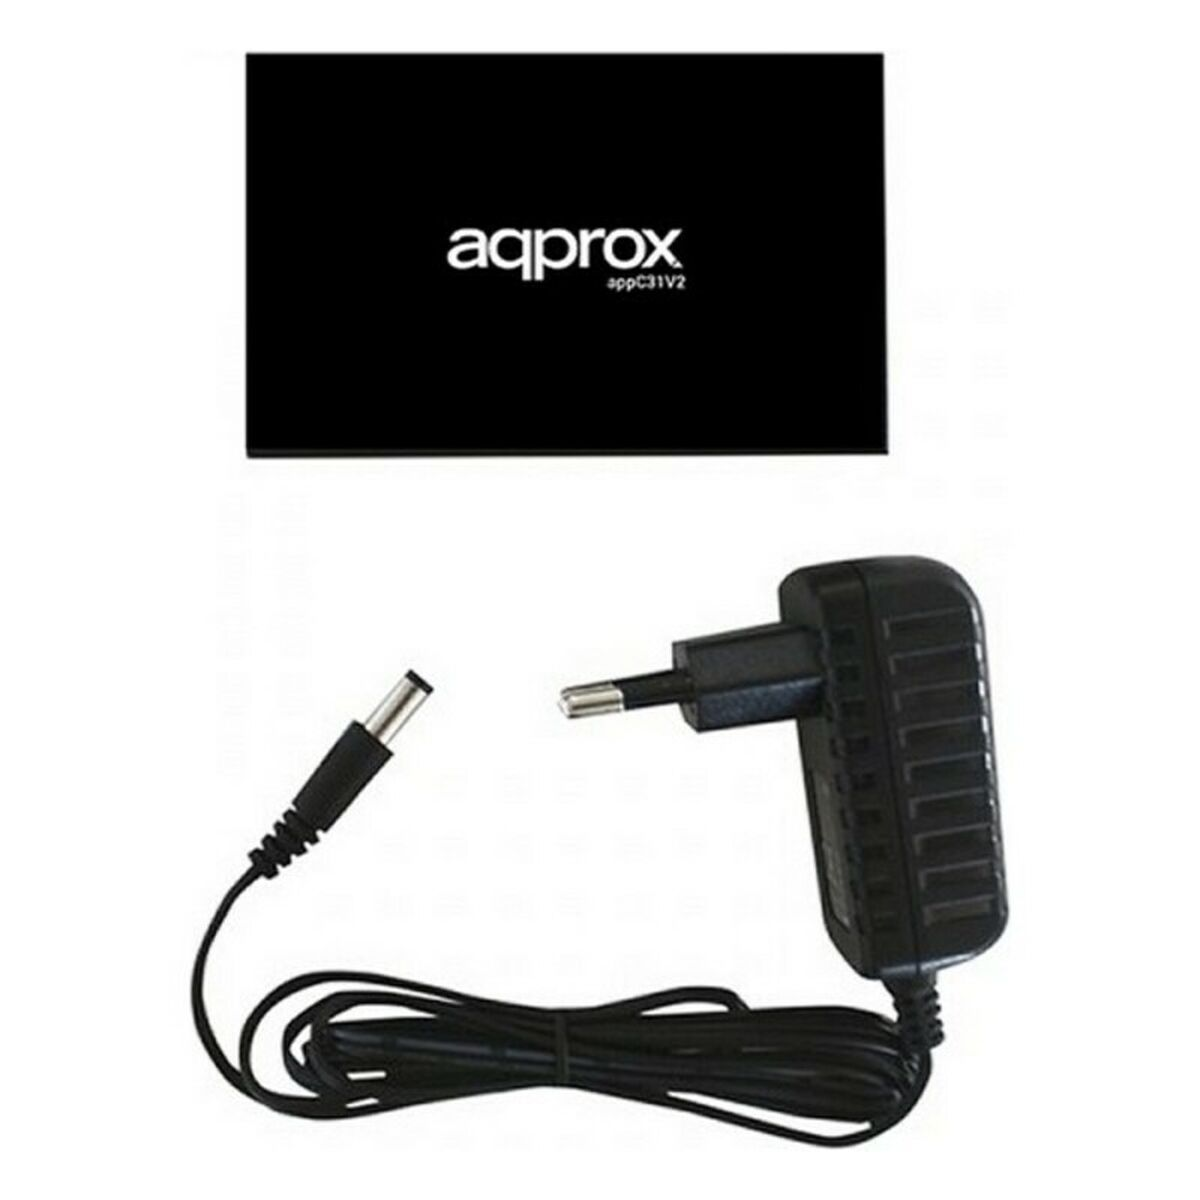 APPROX APPC31V2 15 cm AV-Adapter/Konverter